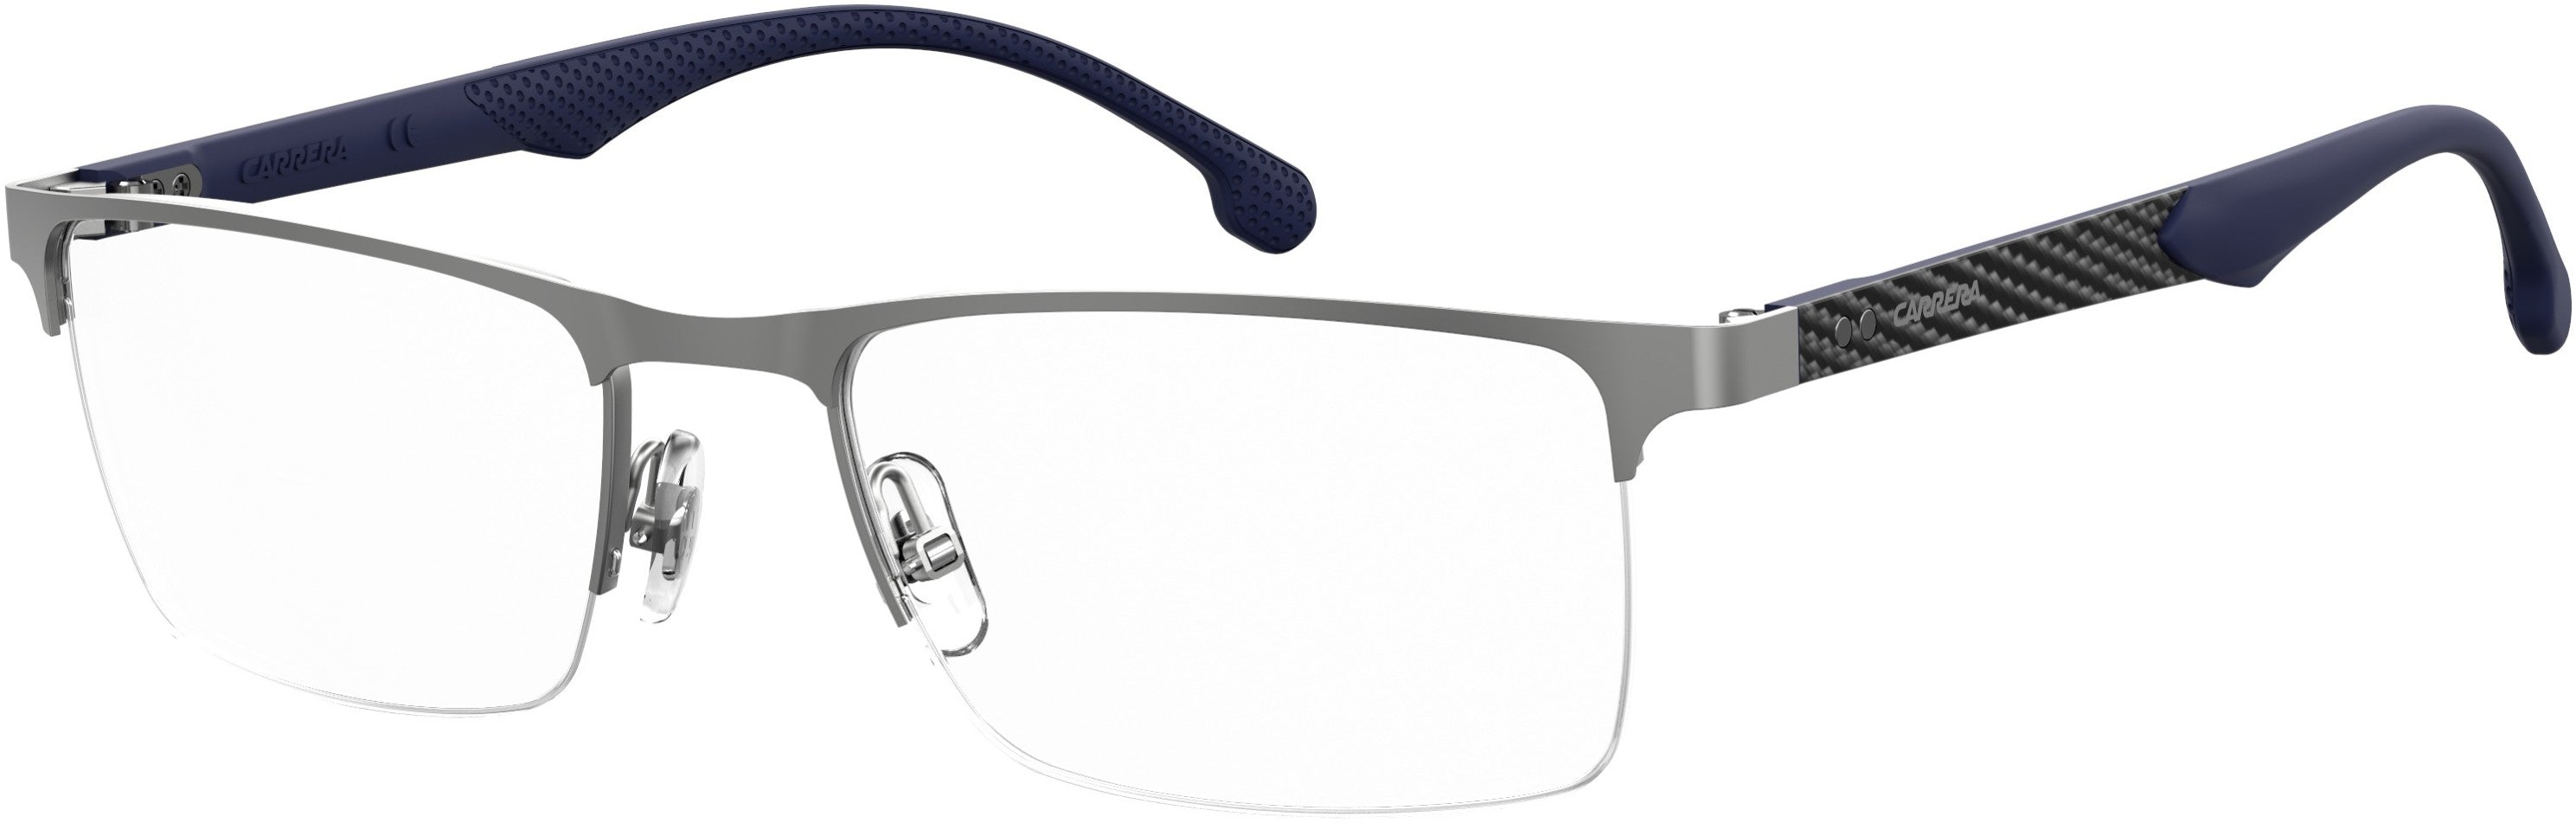  Carrera 8846 Rectangular Eyeglasses 0R81-0R81  Matte Ruthenium (00 Demo Lens)